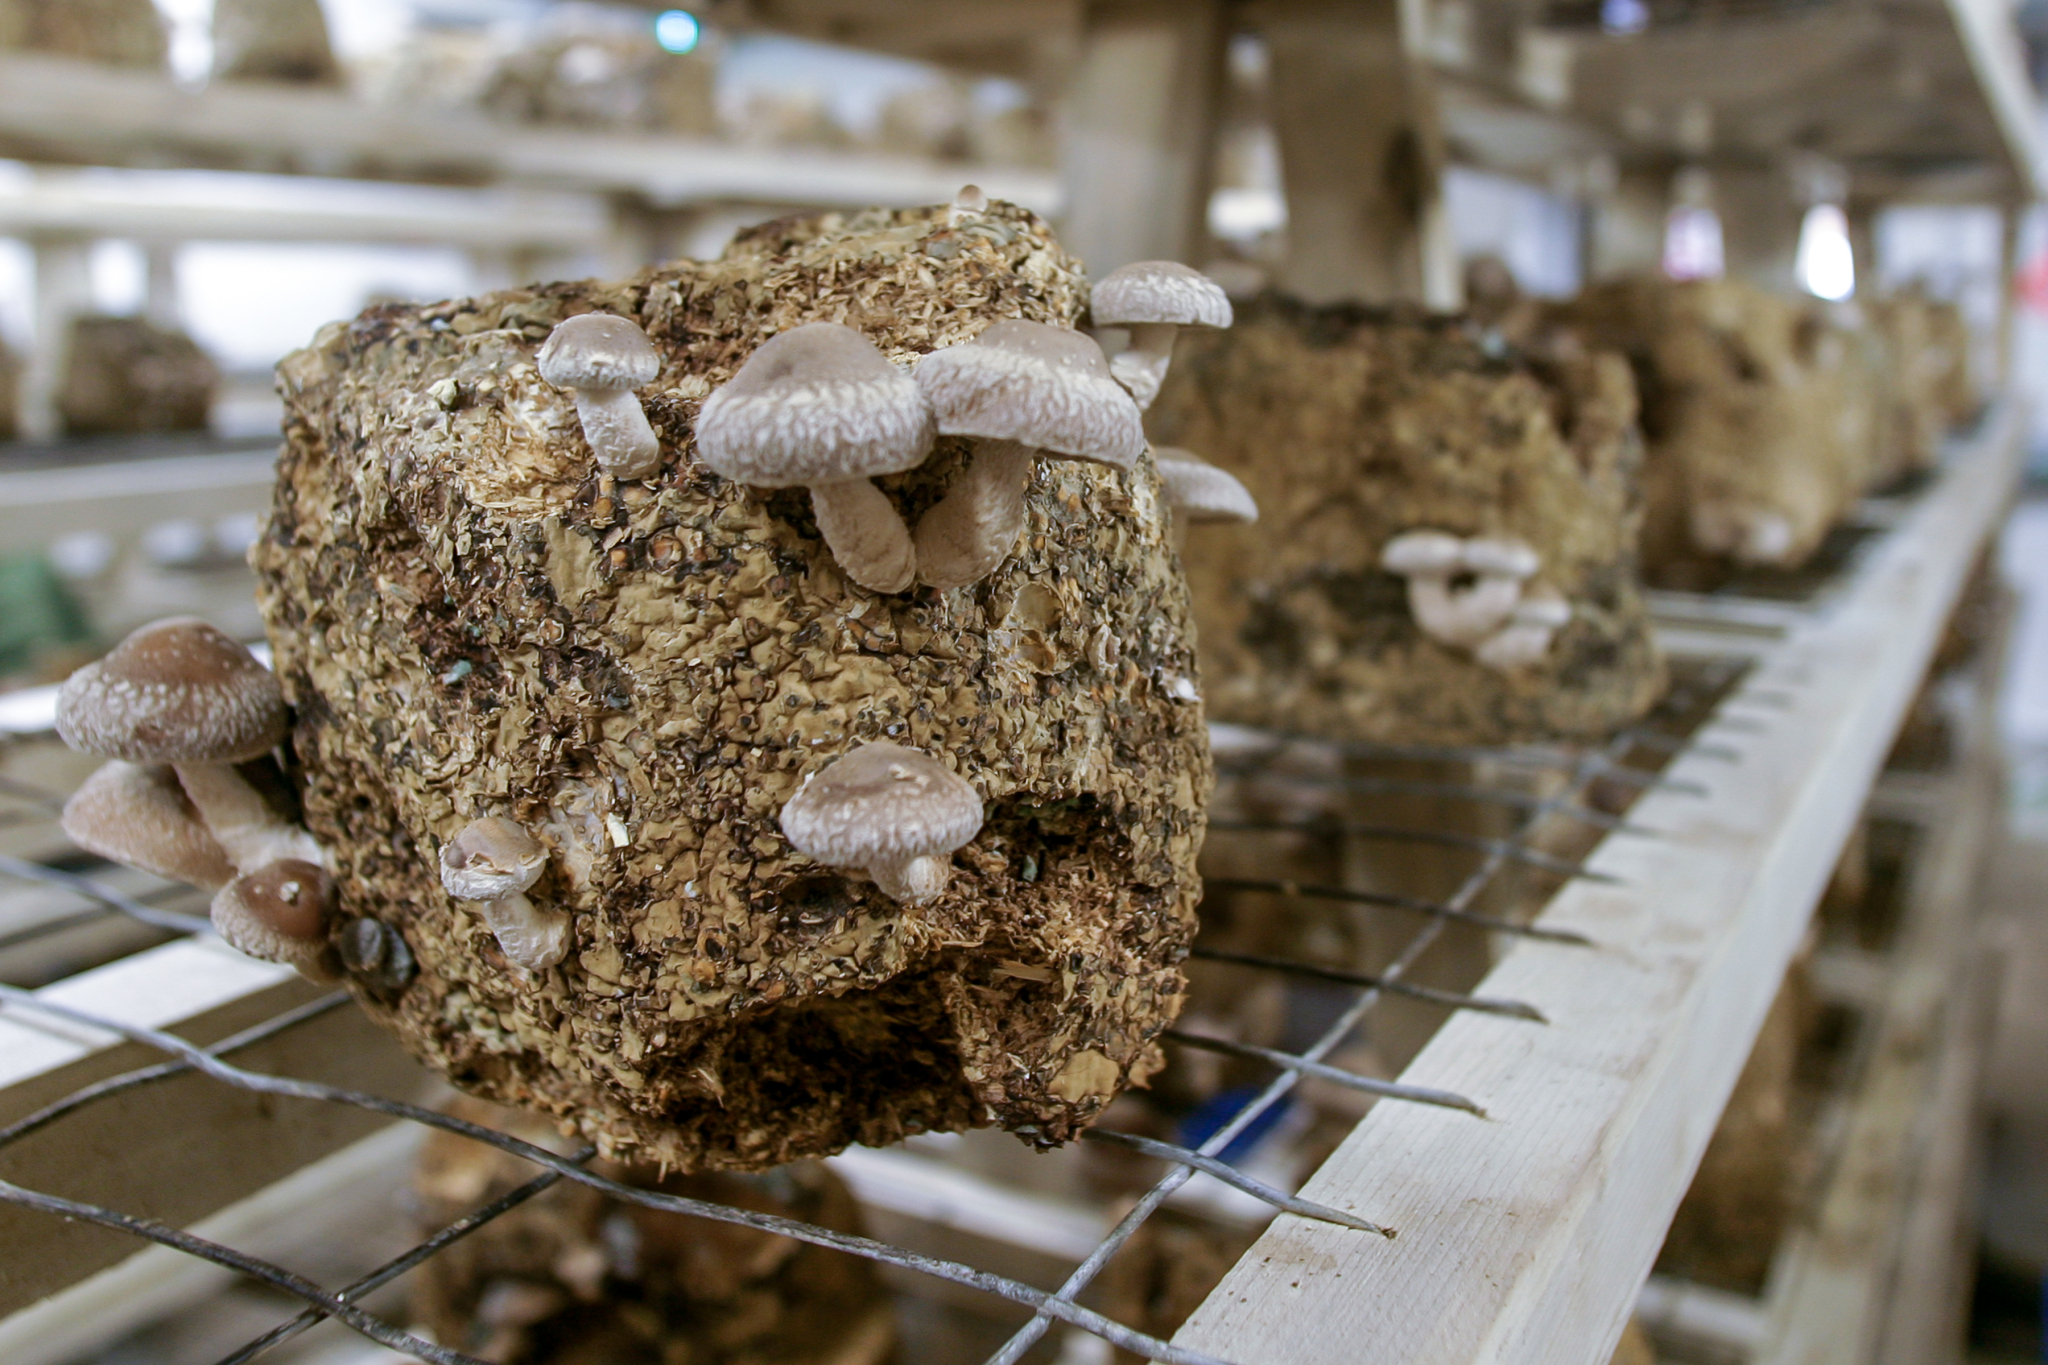 Shiitake mushrooms poke out of a cube-shaped wooden growing medium.